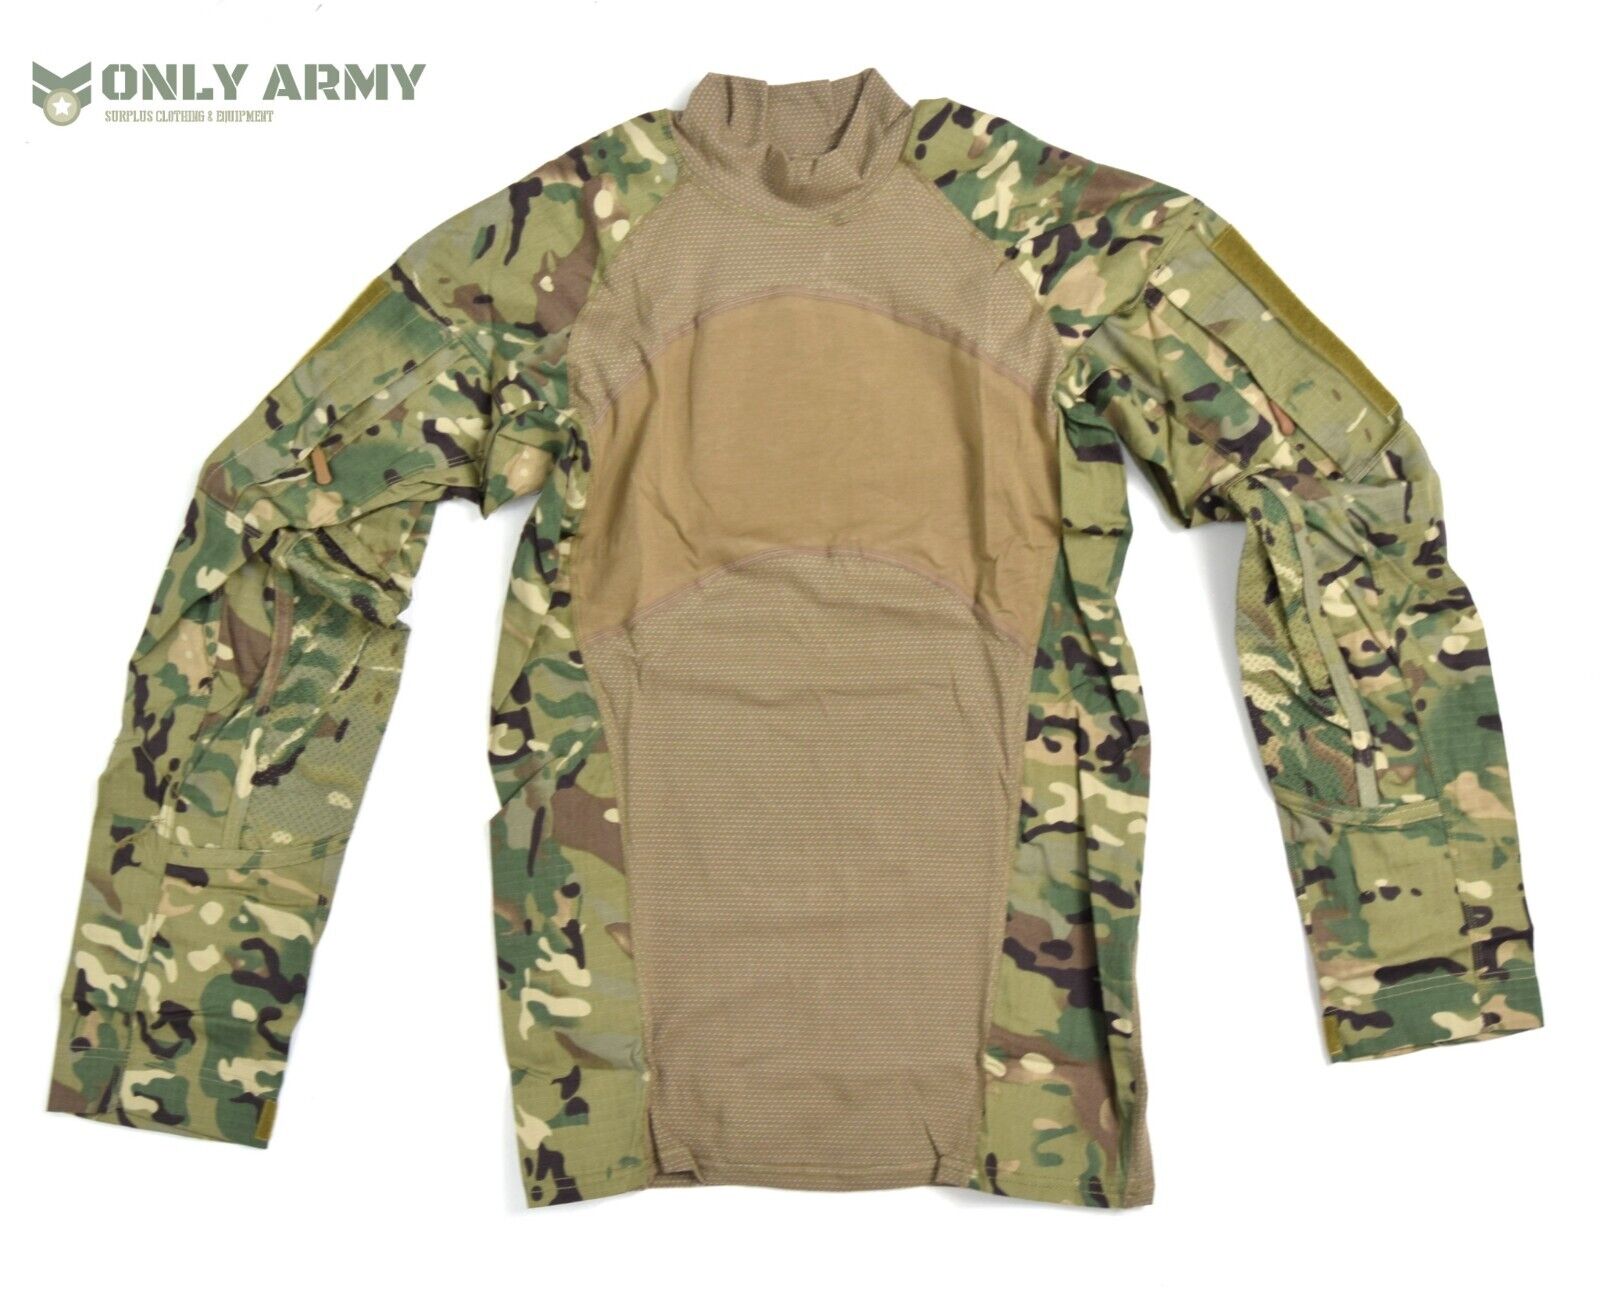 US Army Style UBAC Tactical Combat ACS Shirt Massif Design MULTICAM Shirt Top